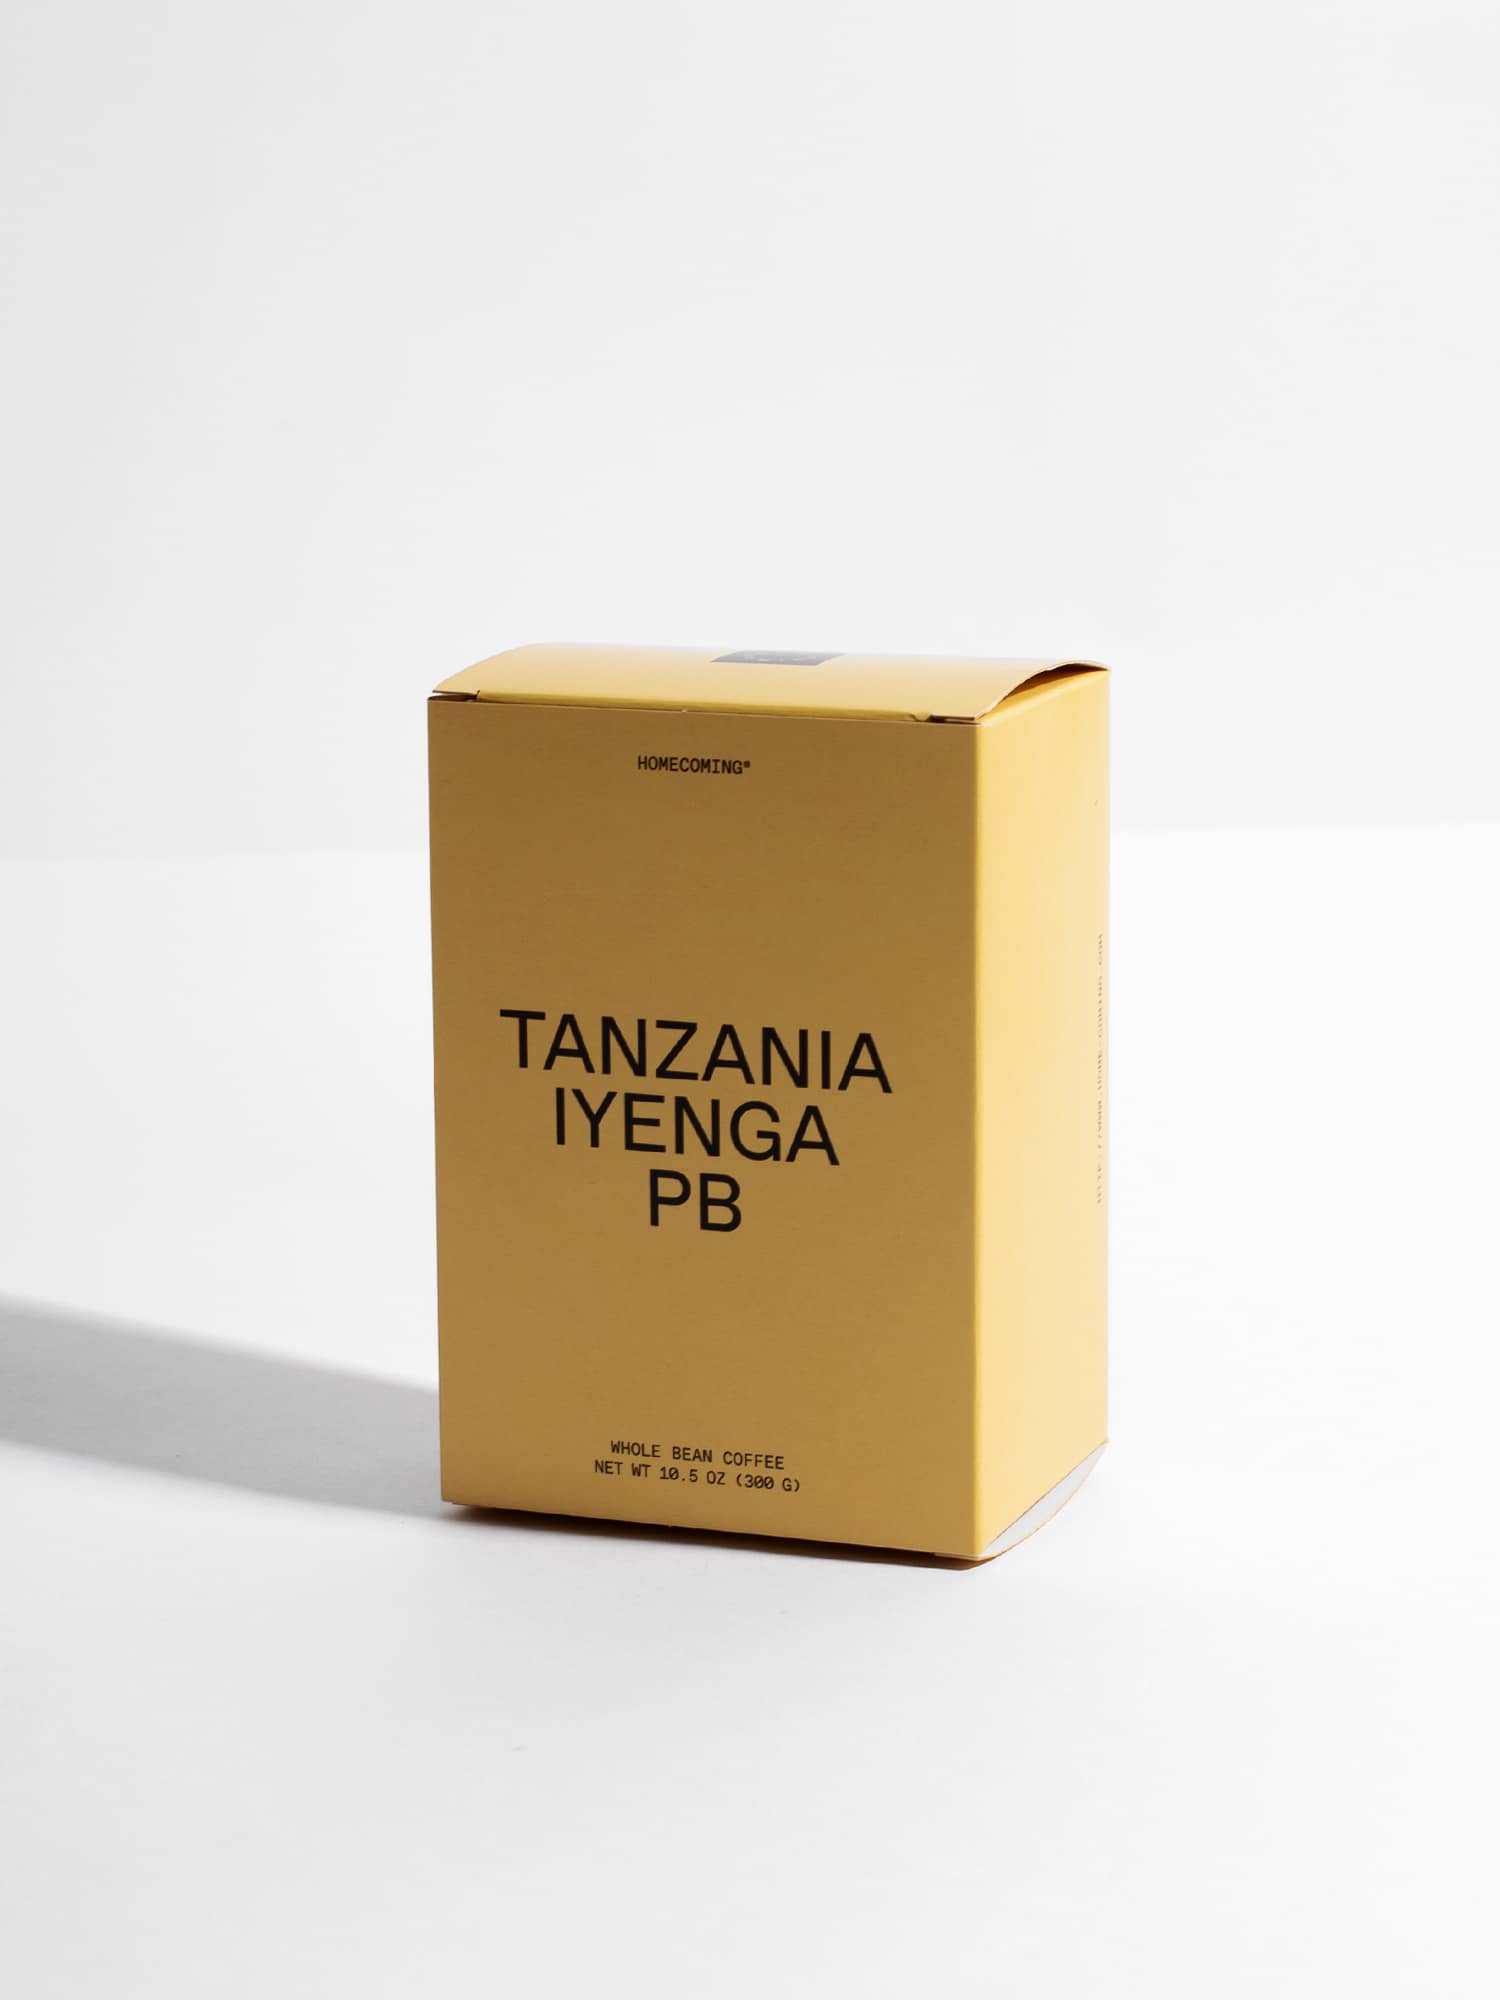 Tanzania Iyenga PB